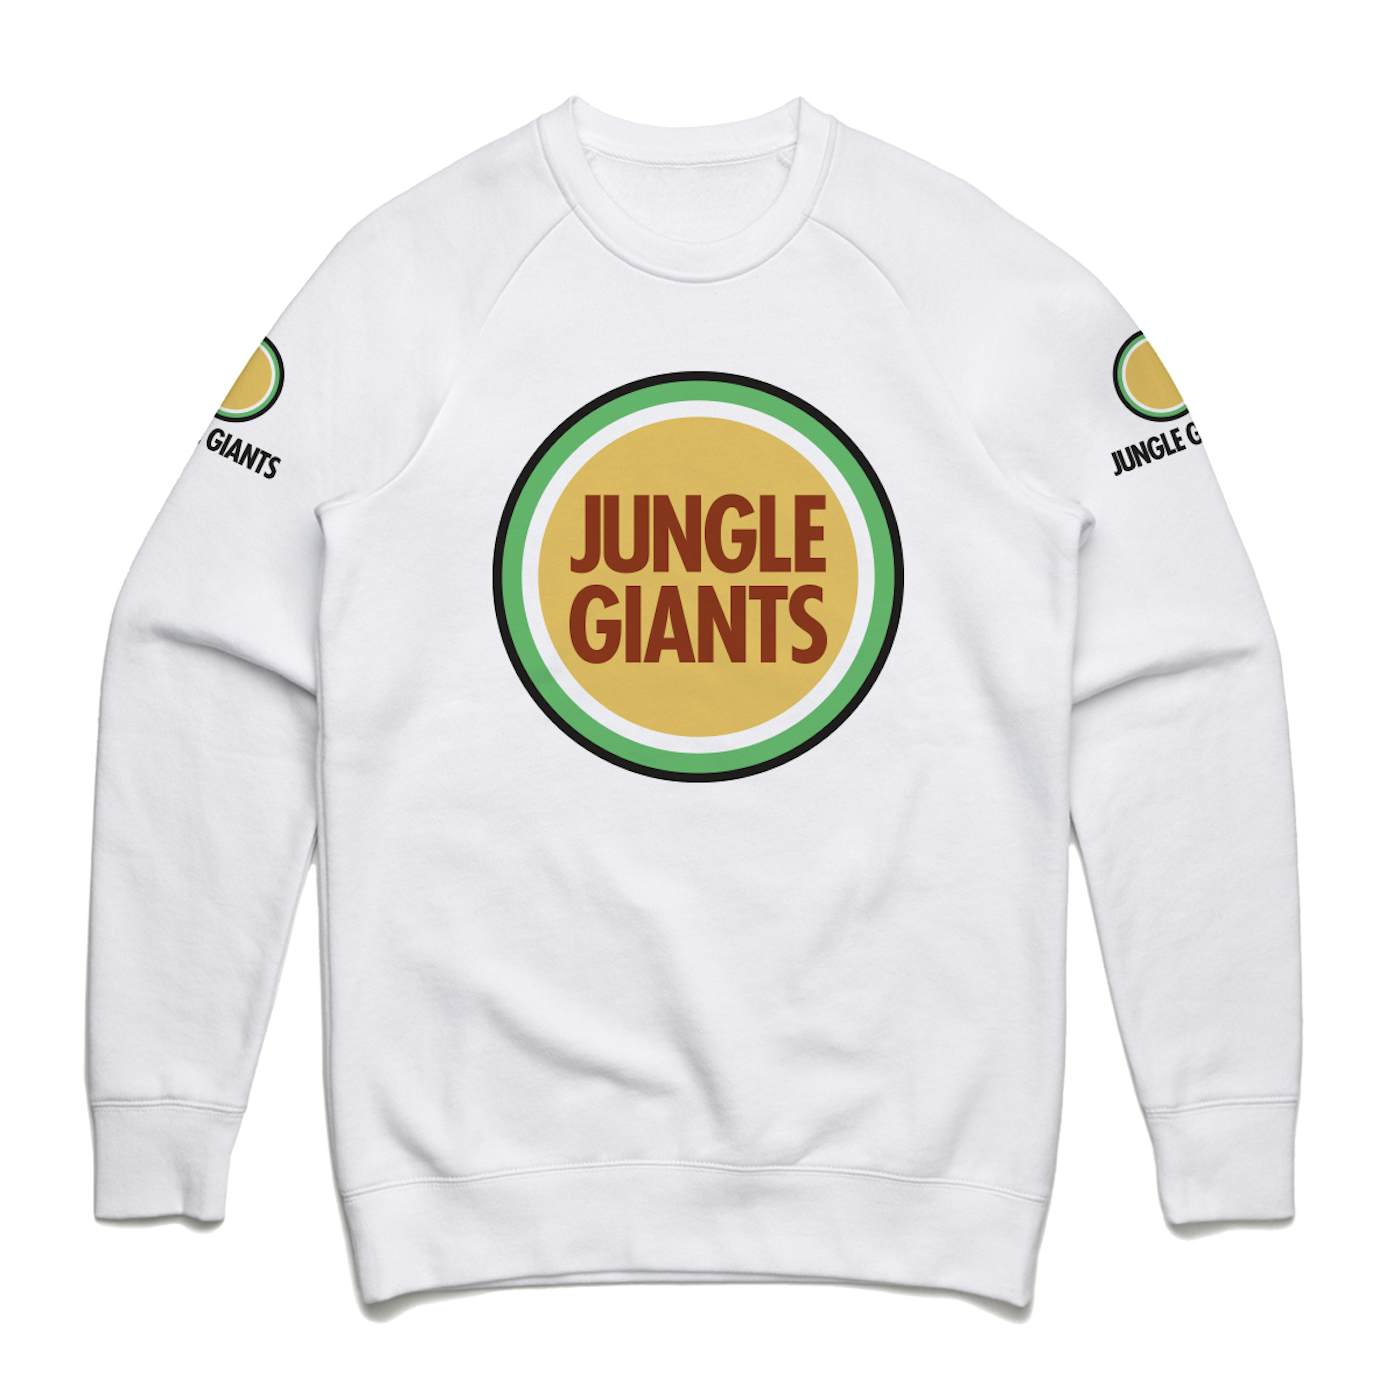 The Jungle Giants - White Crew